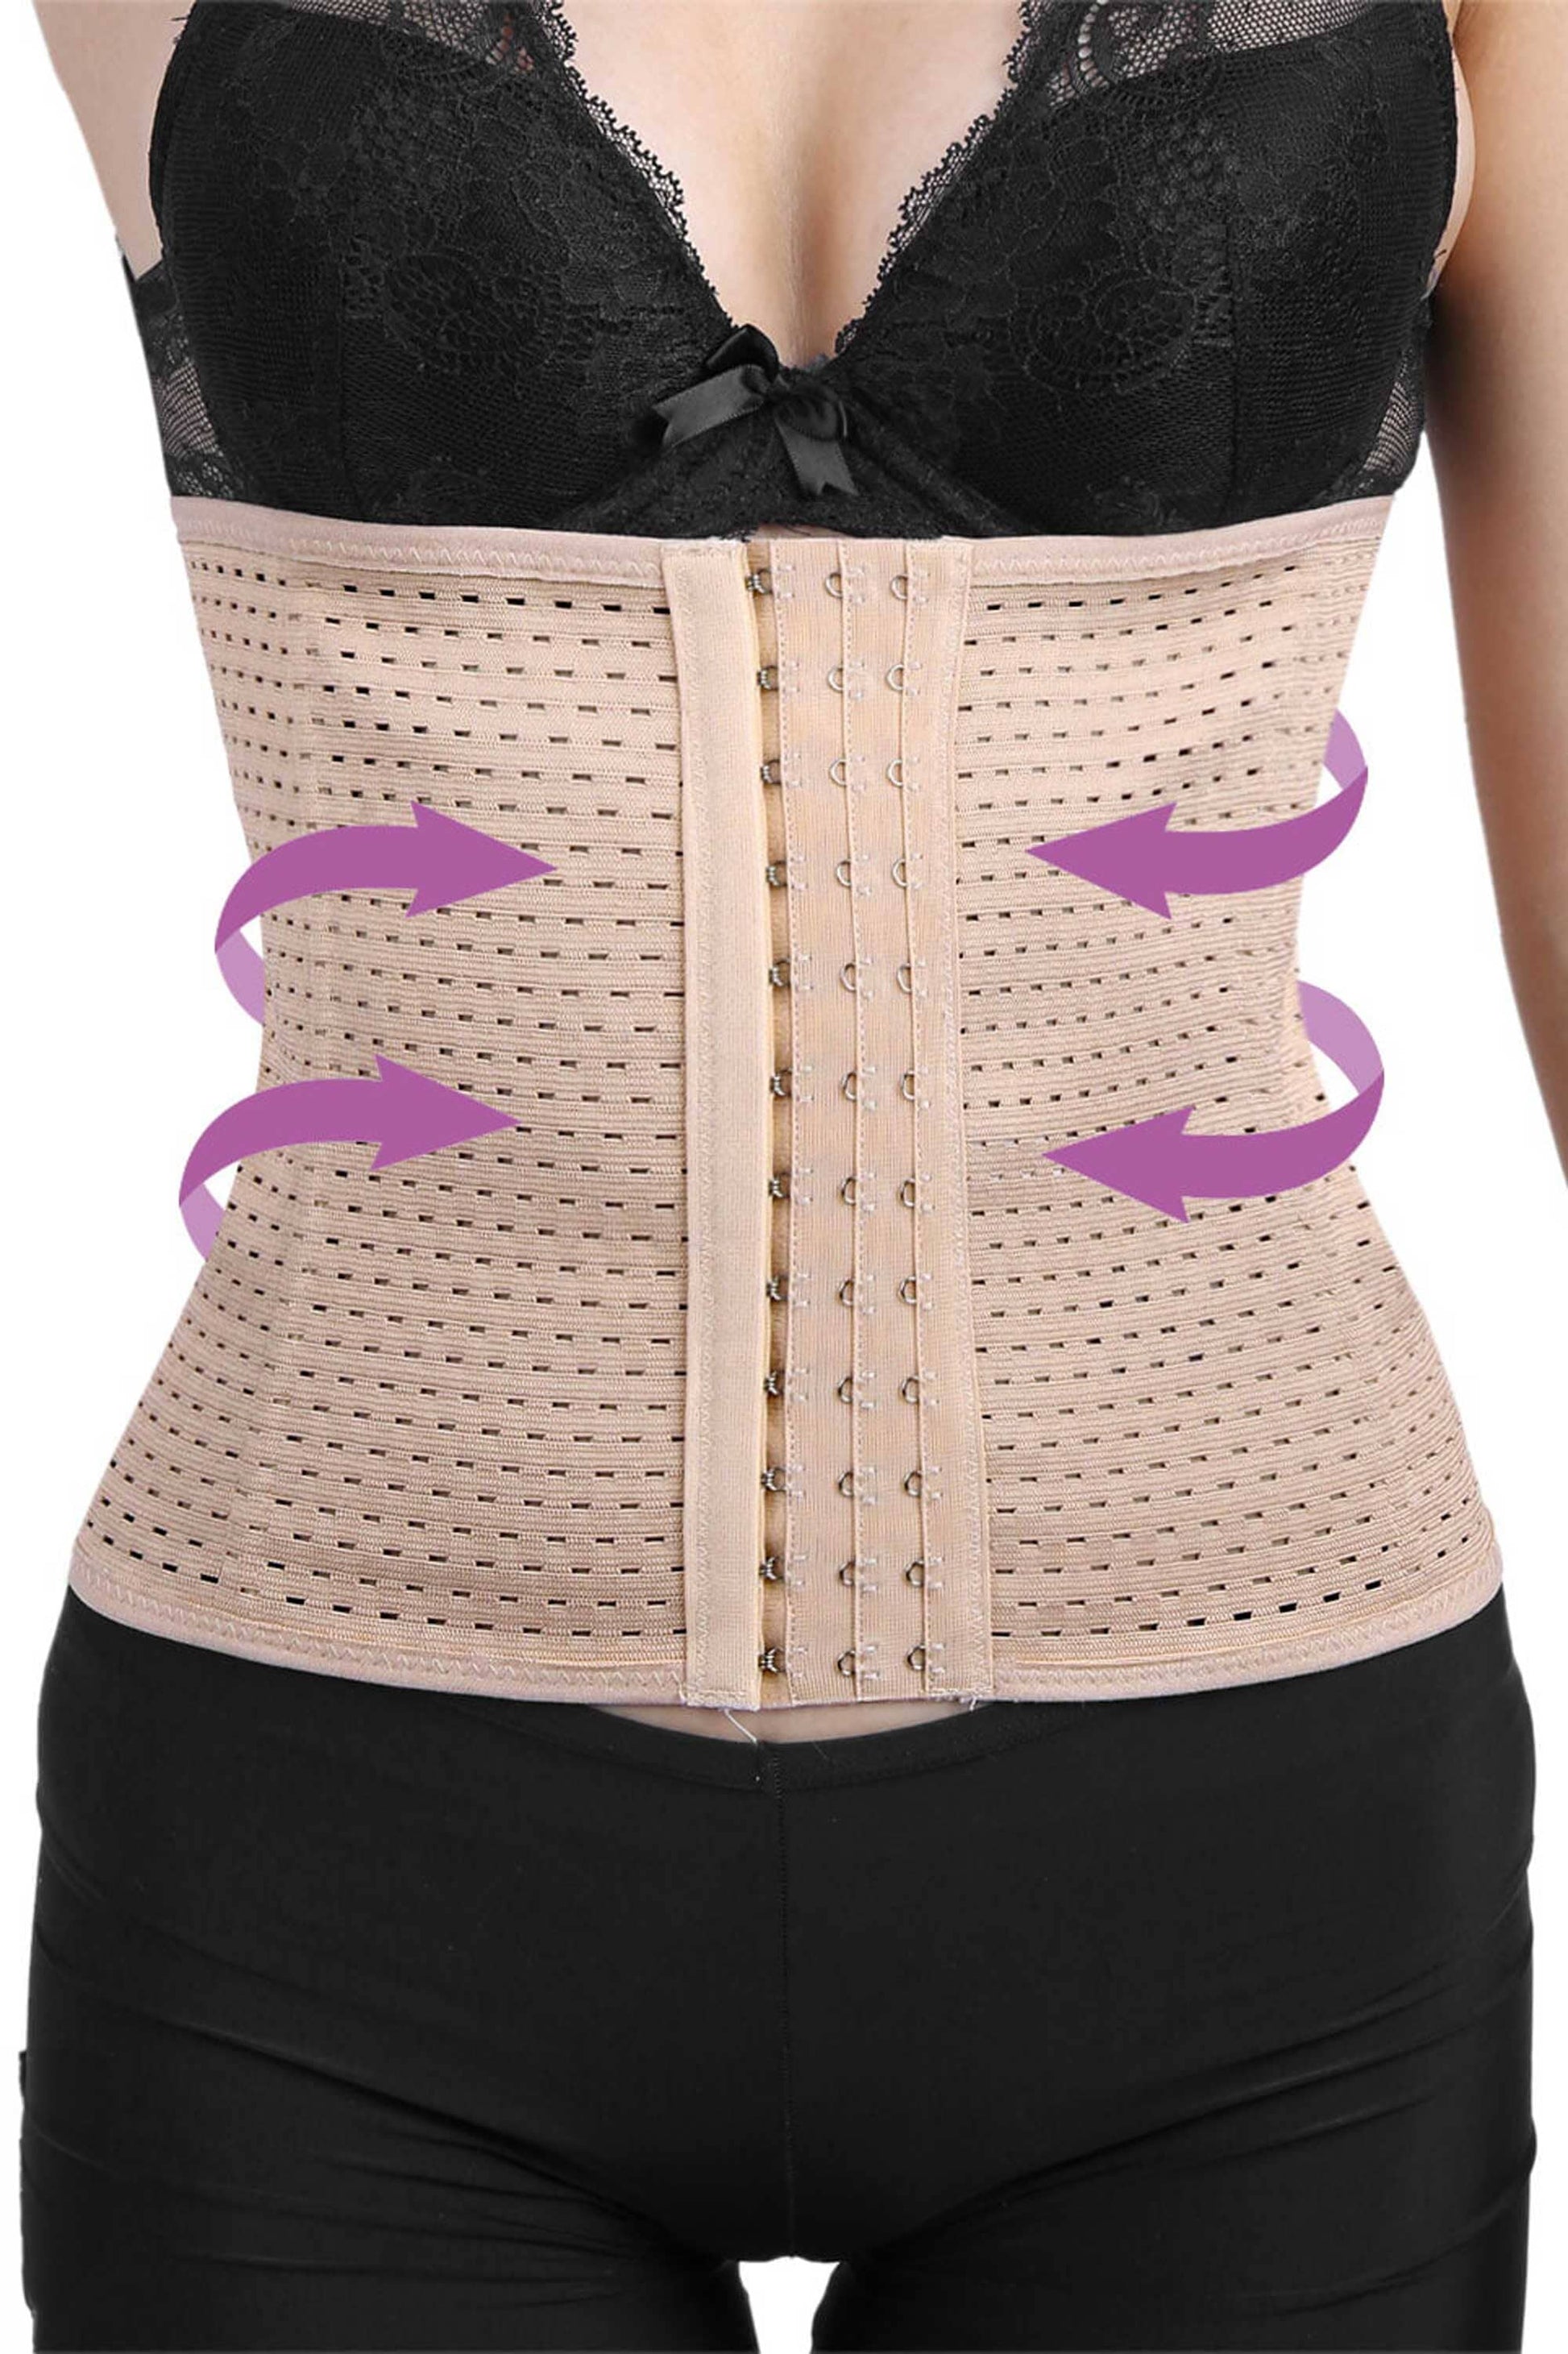 Body Shaper Tummy Waist Control Belt With Hooks